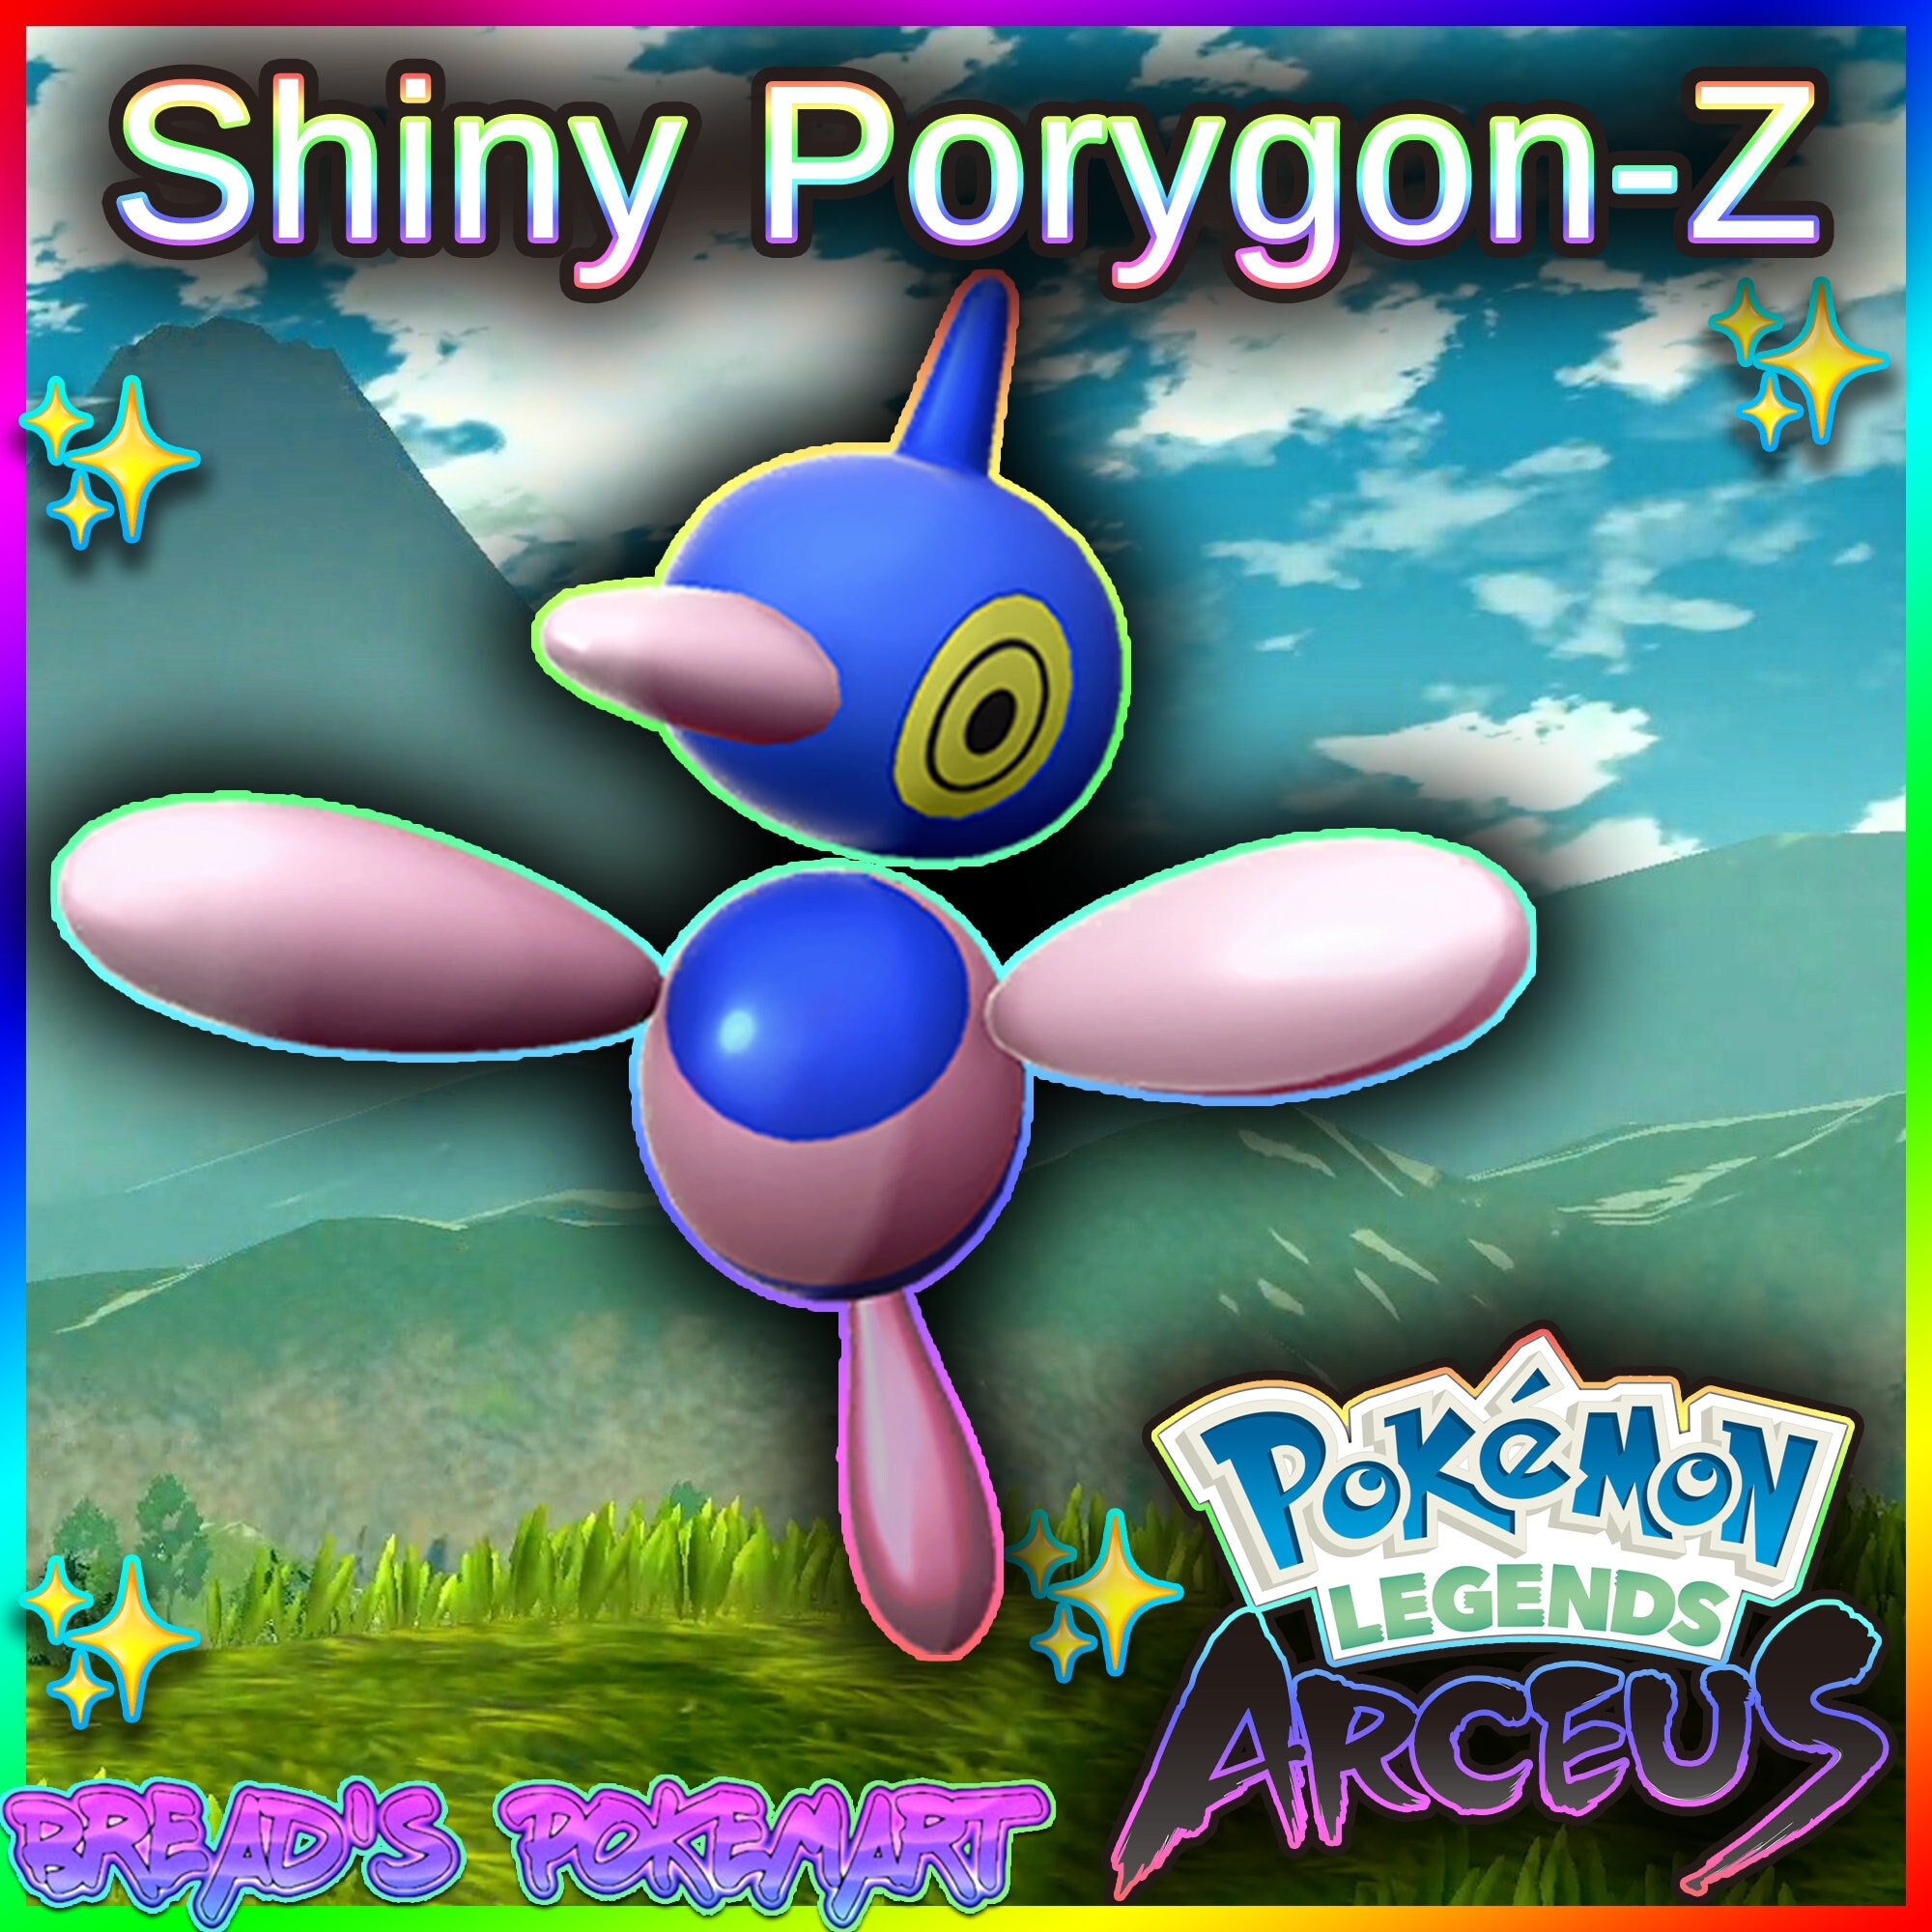 Porygon-Z, Pokémon